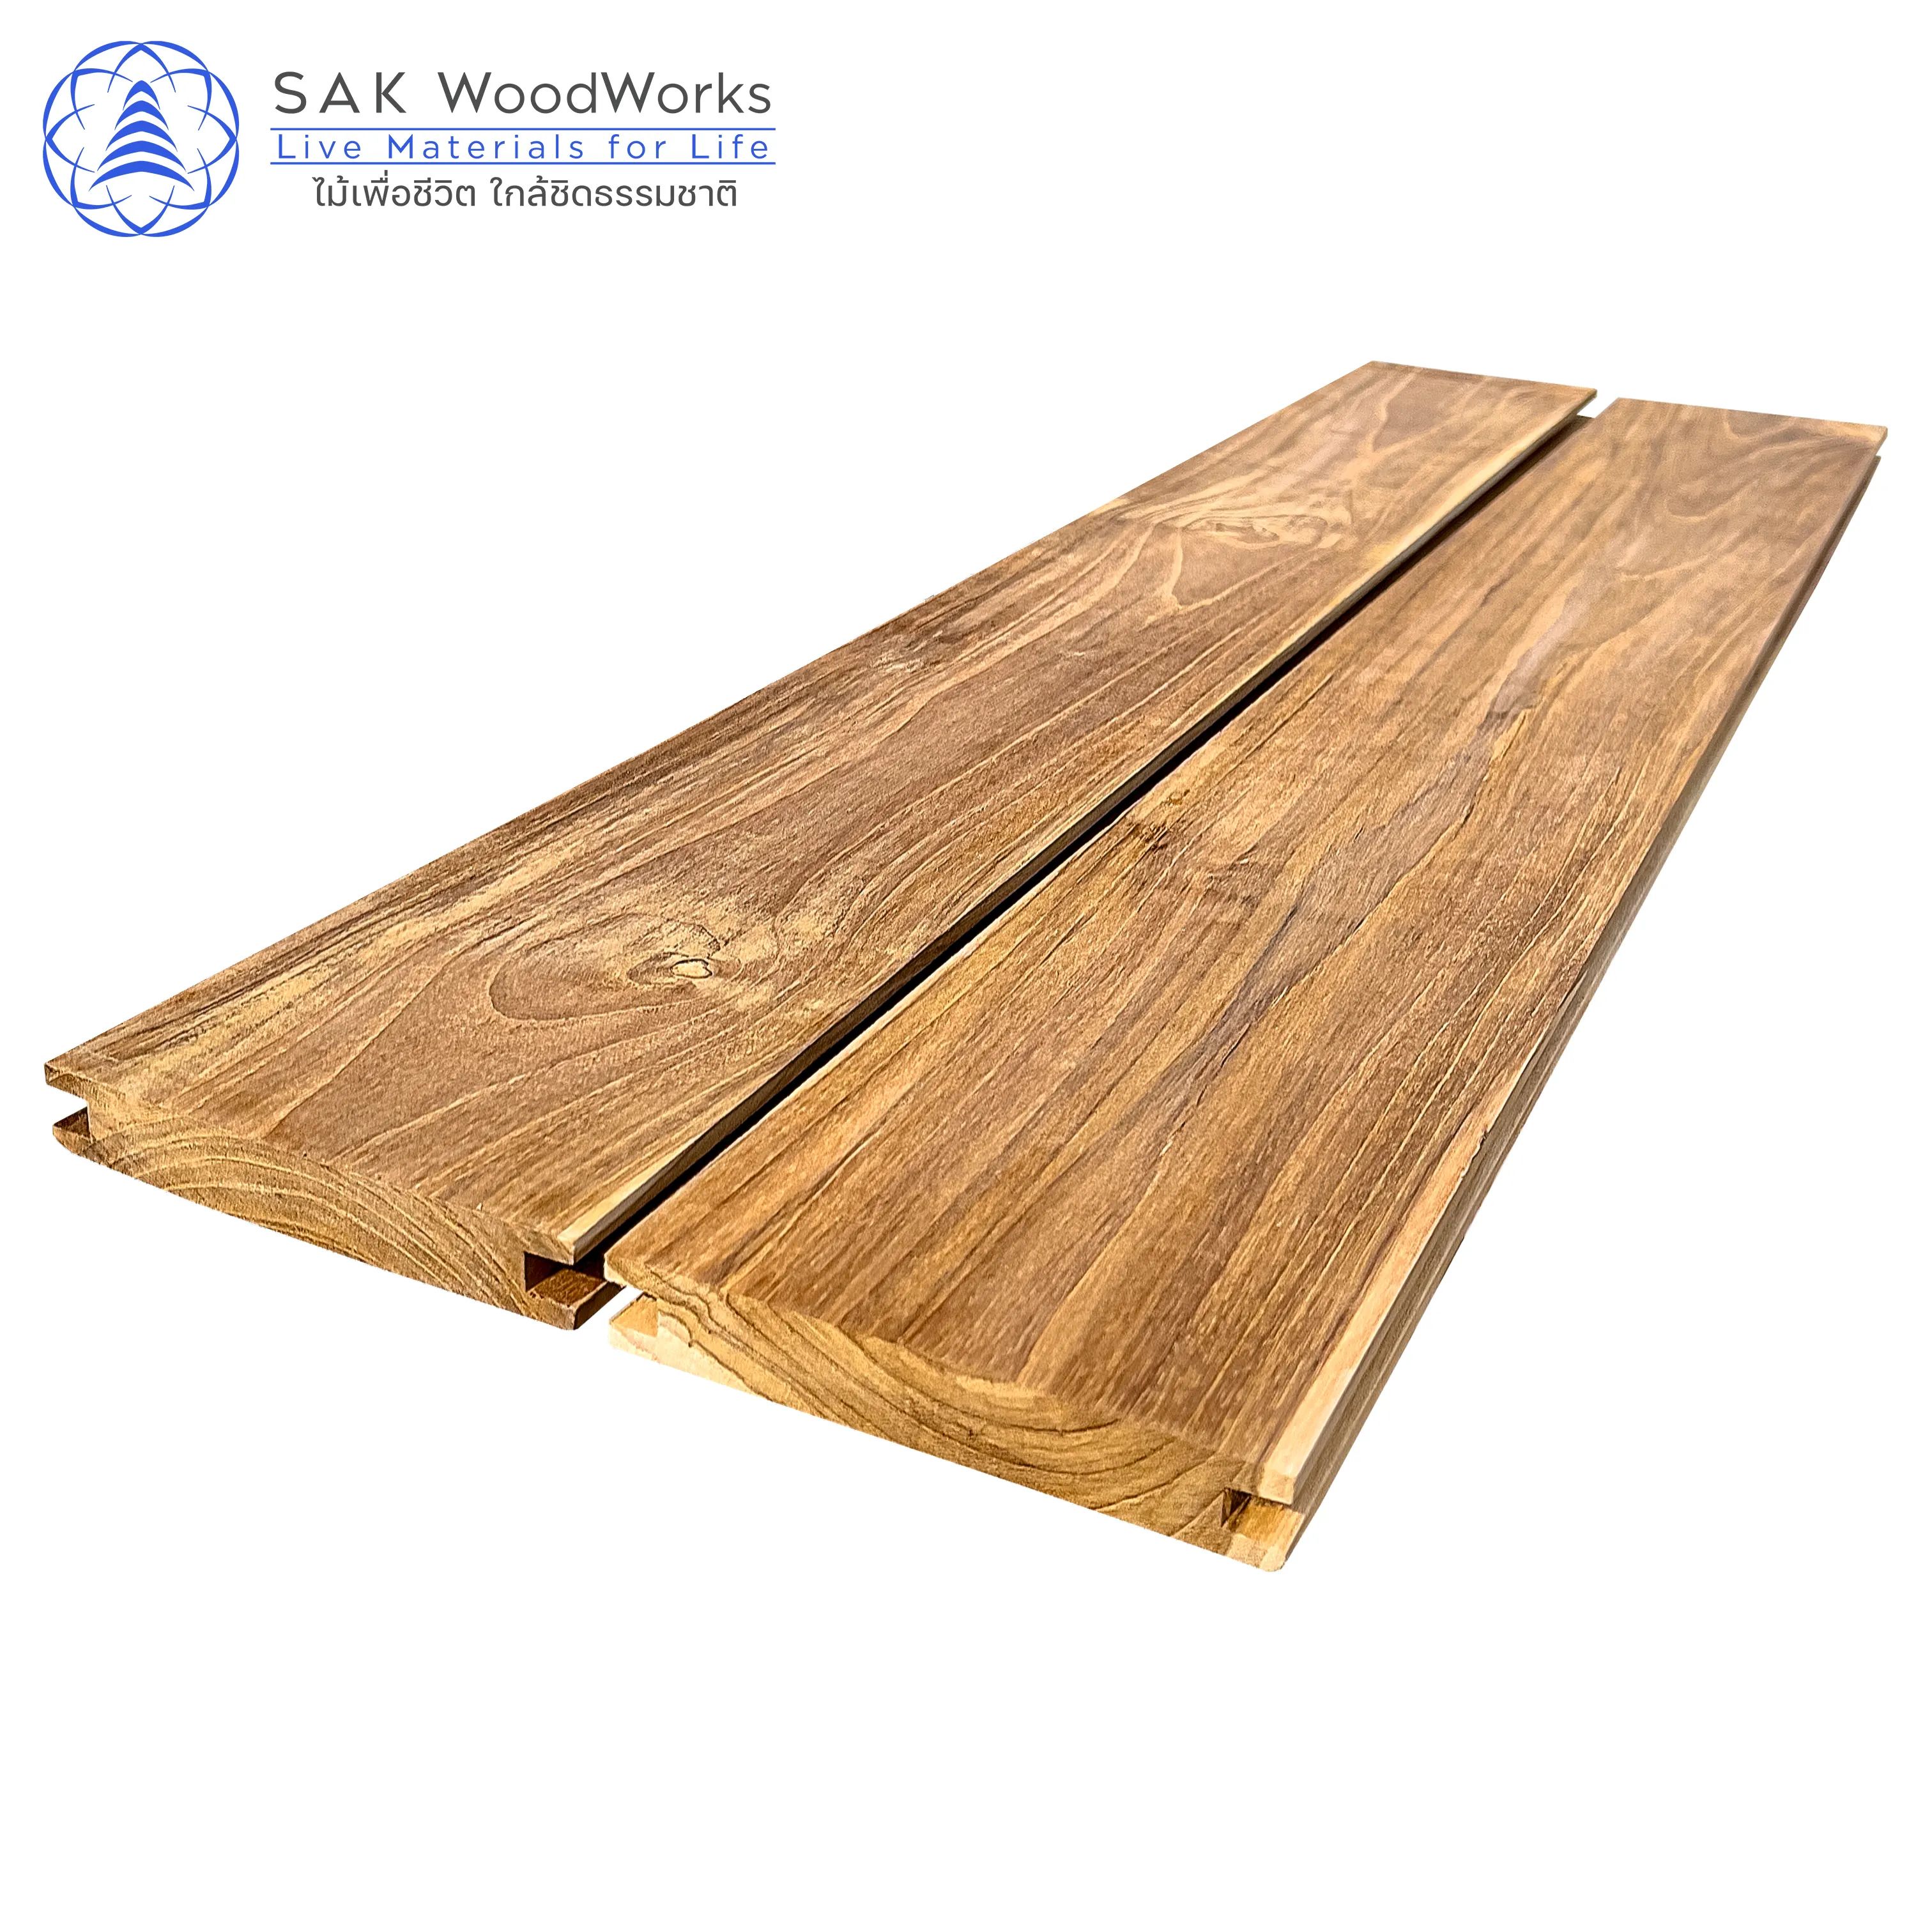 Teca tailandesa Decking Placas por SAK WoodWorks | 22x140mm. x 2 m. | Ultimate Outdoor Decking Solution Weather Termite Resistant